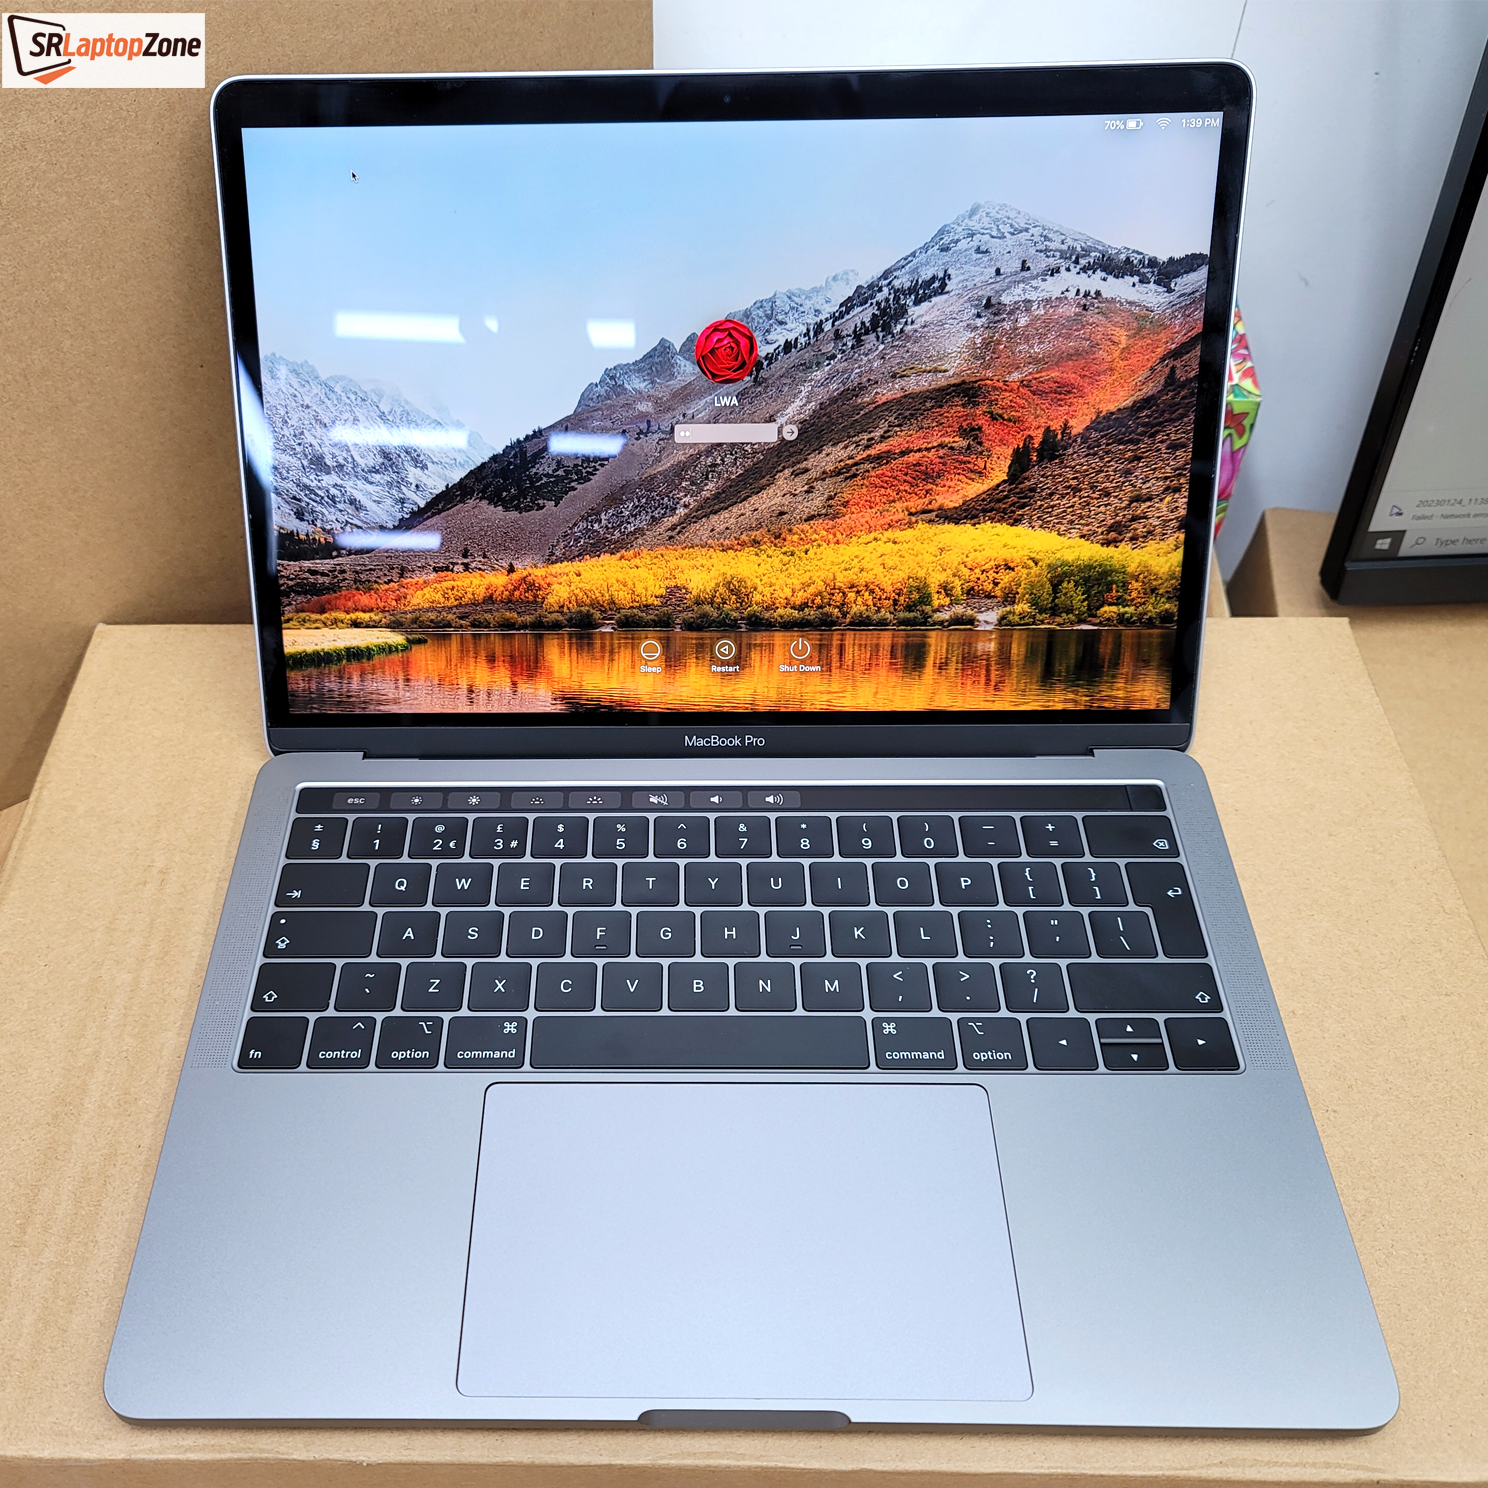 Apple MacBook Pro 2019 Core i7 2.60 Ghz Processor, 16GB RAM 256 GB SSD 13 Inch Retina Display With TouchBar